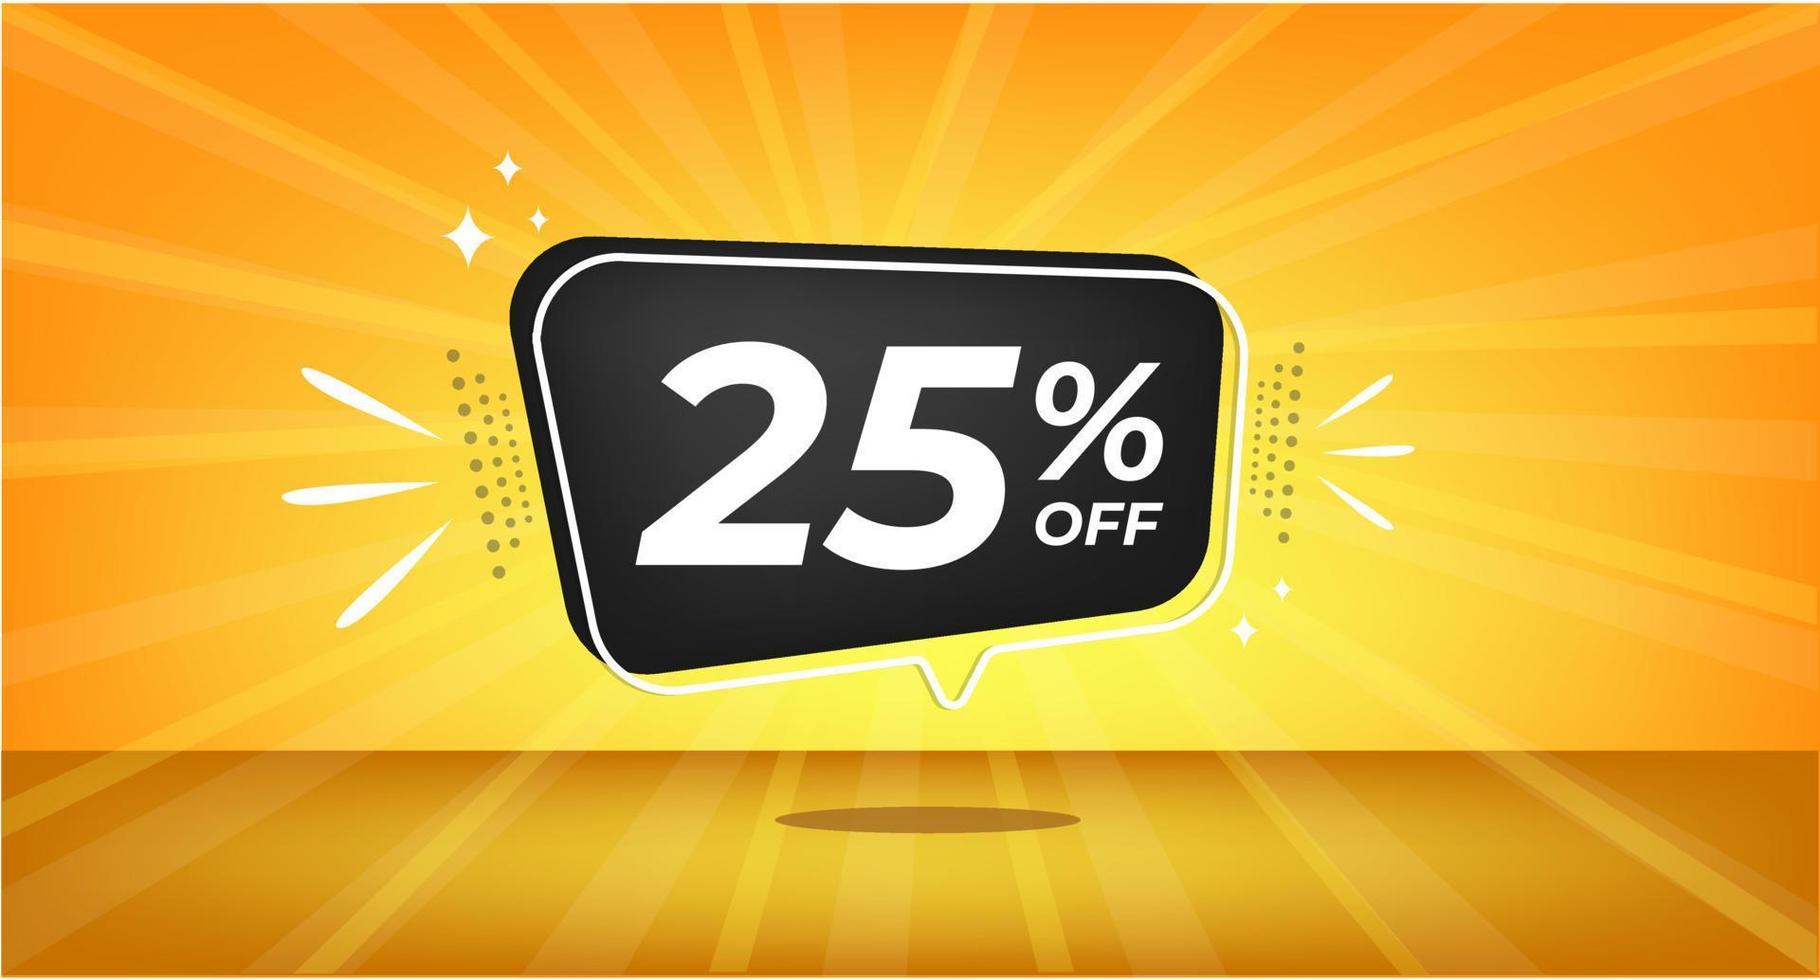 25 percent off. Yellow banner with twenty-five percent discount on a black balloon for mega big sales. vector